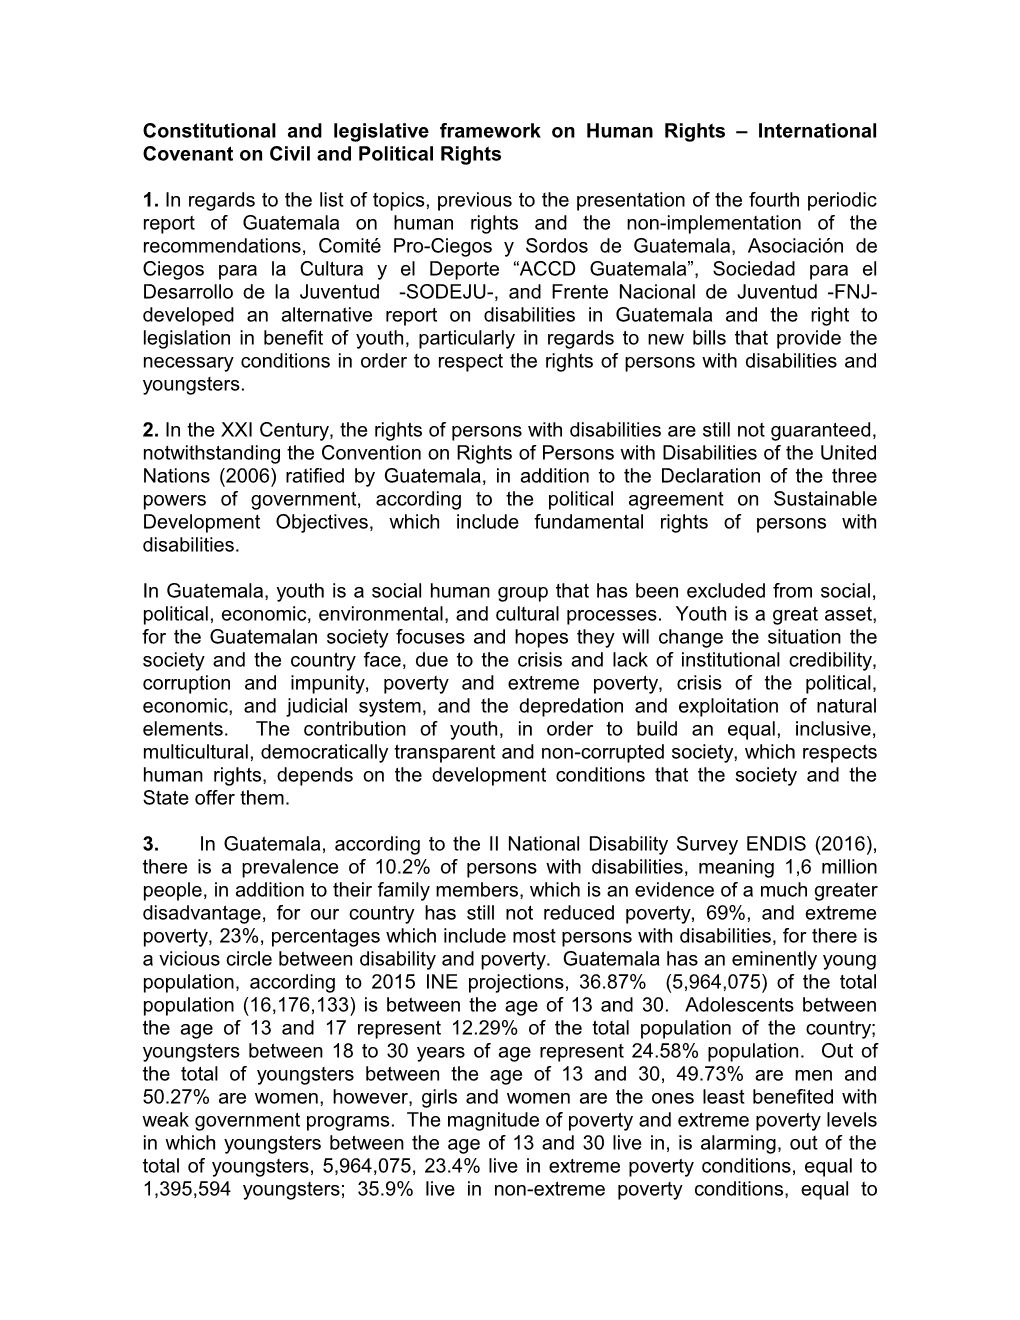 Constitutional and Legislative Framework on Human Rights International Covenant on Civil